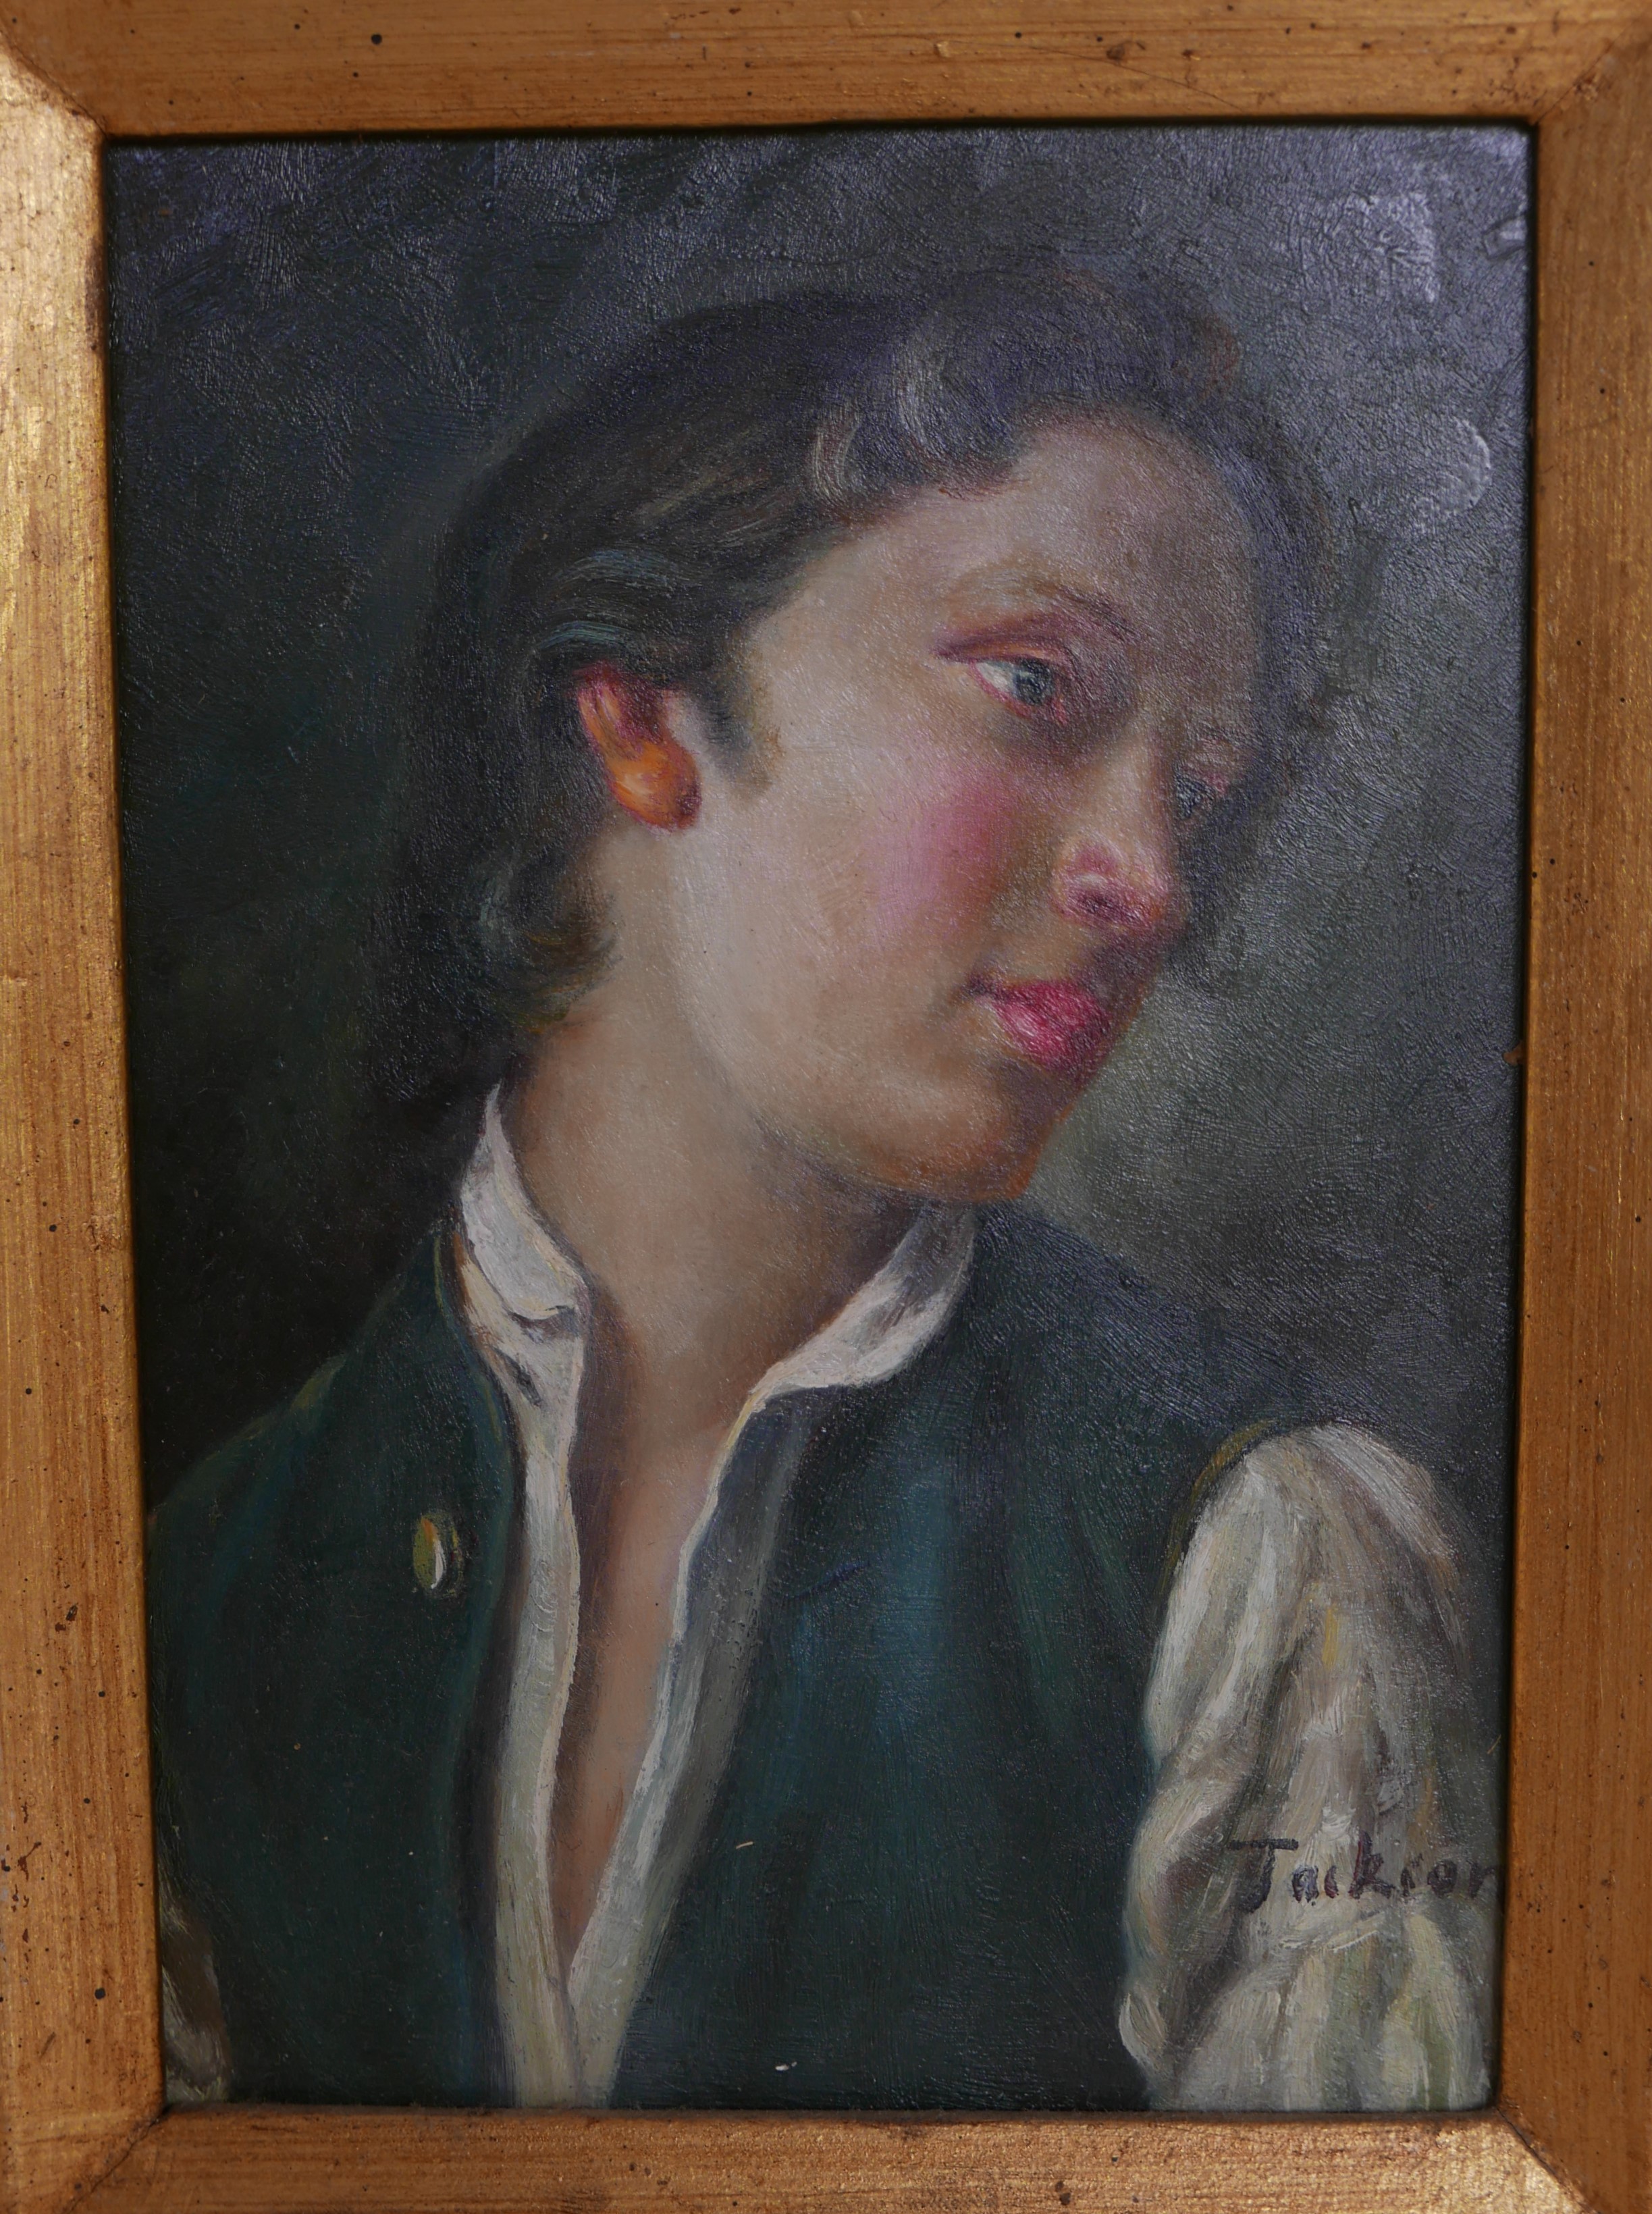 Original Oil by Jackson- "Portrait of Young Boy"